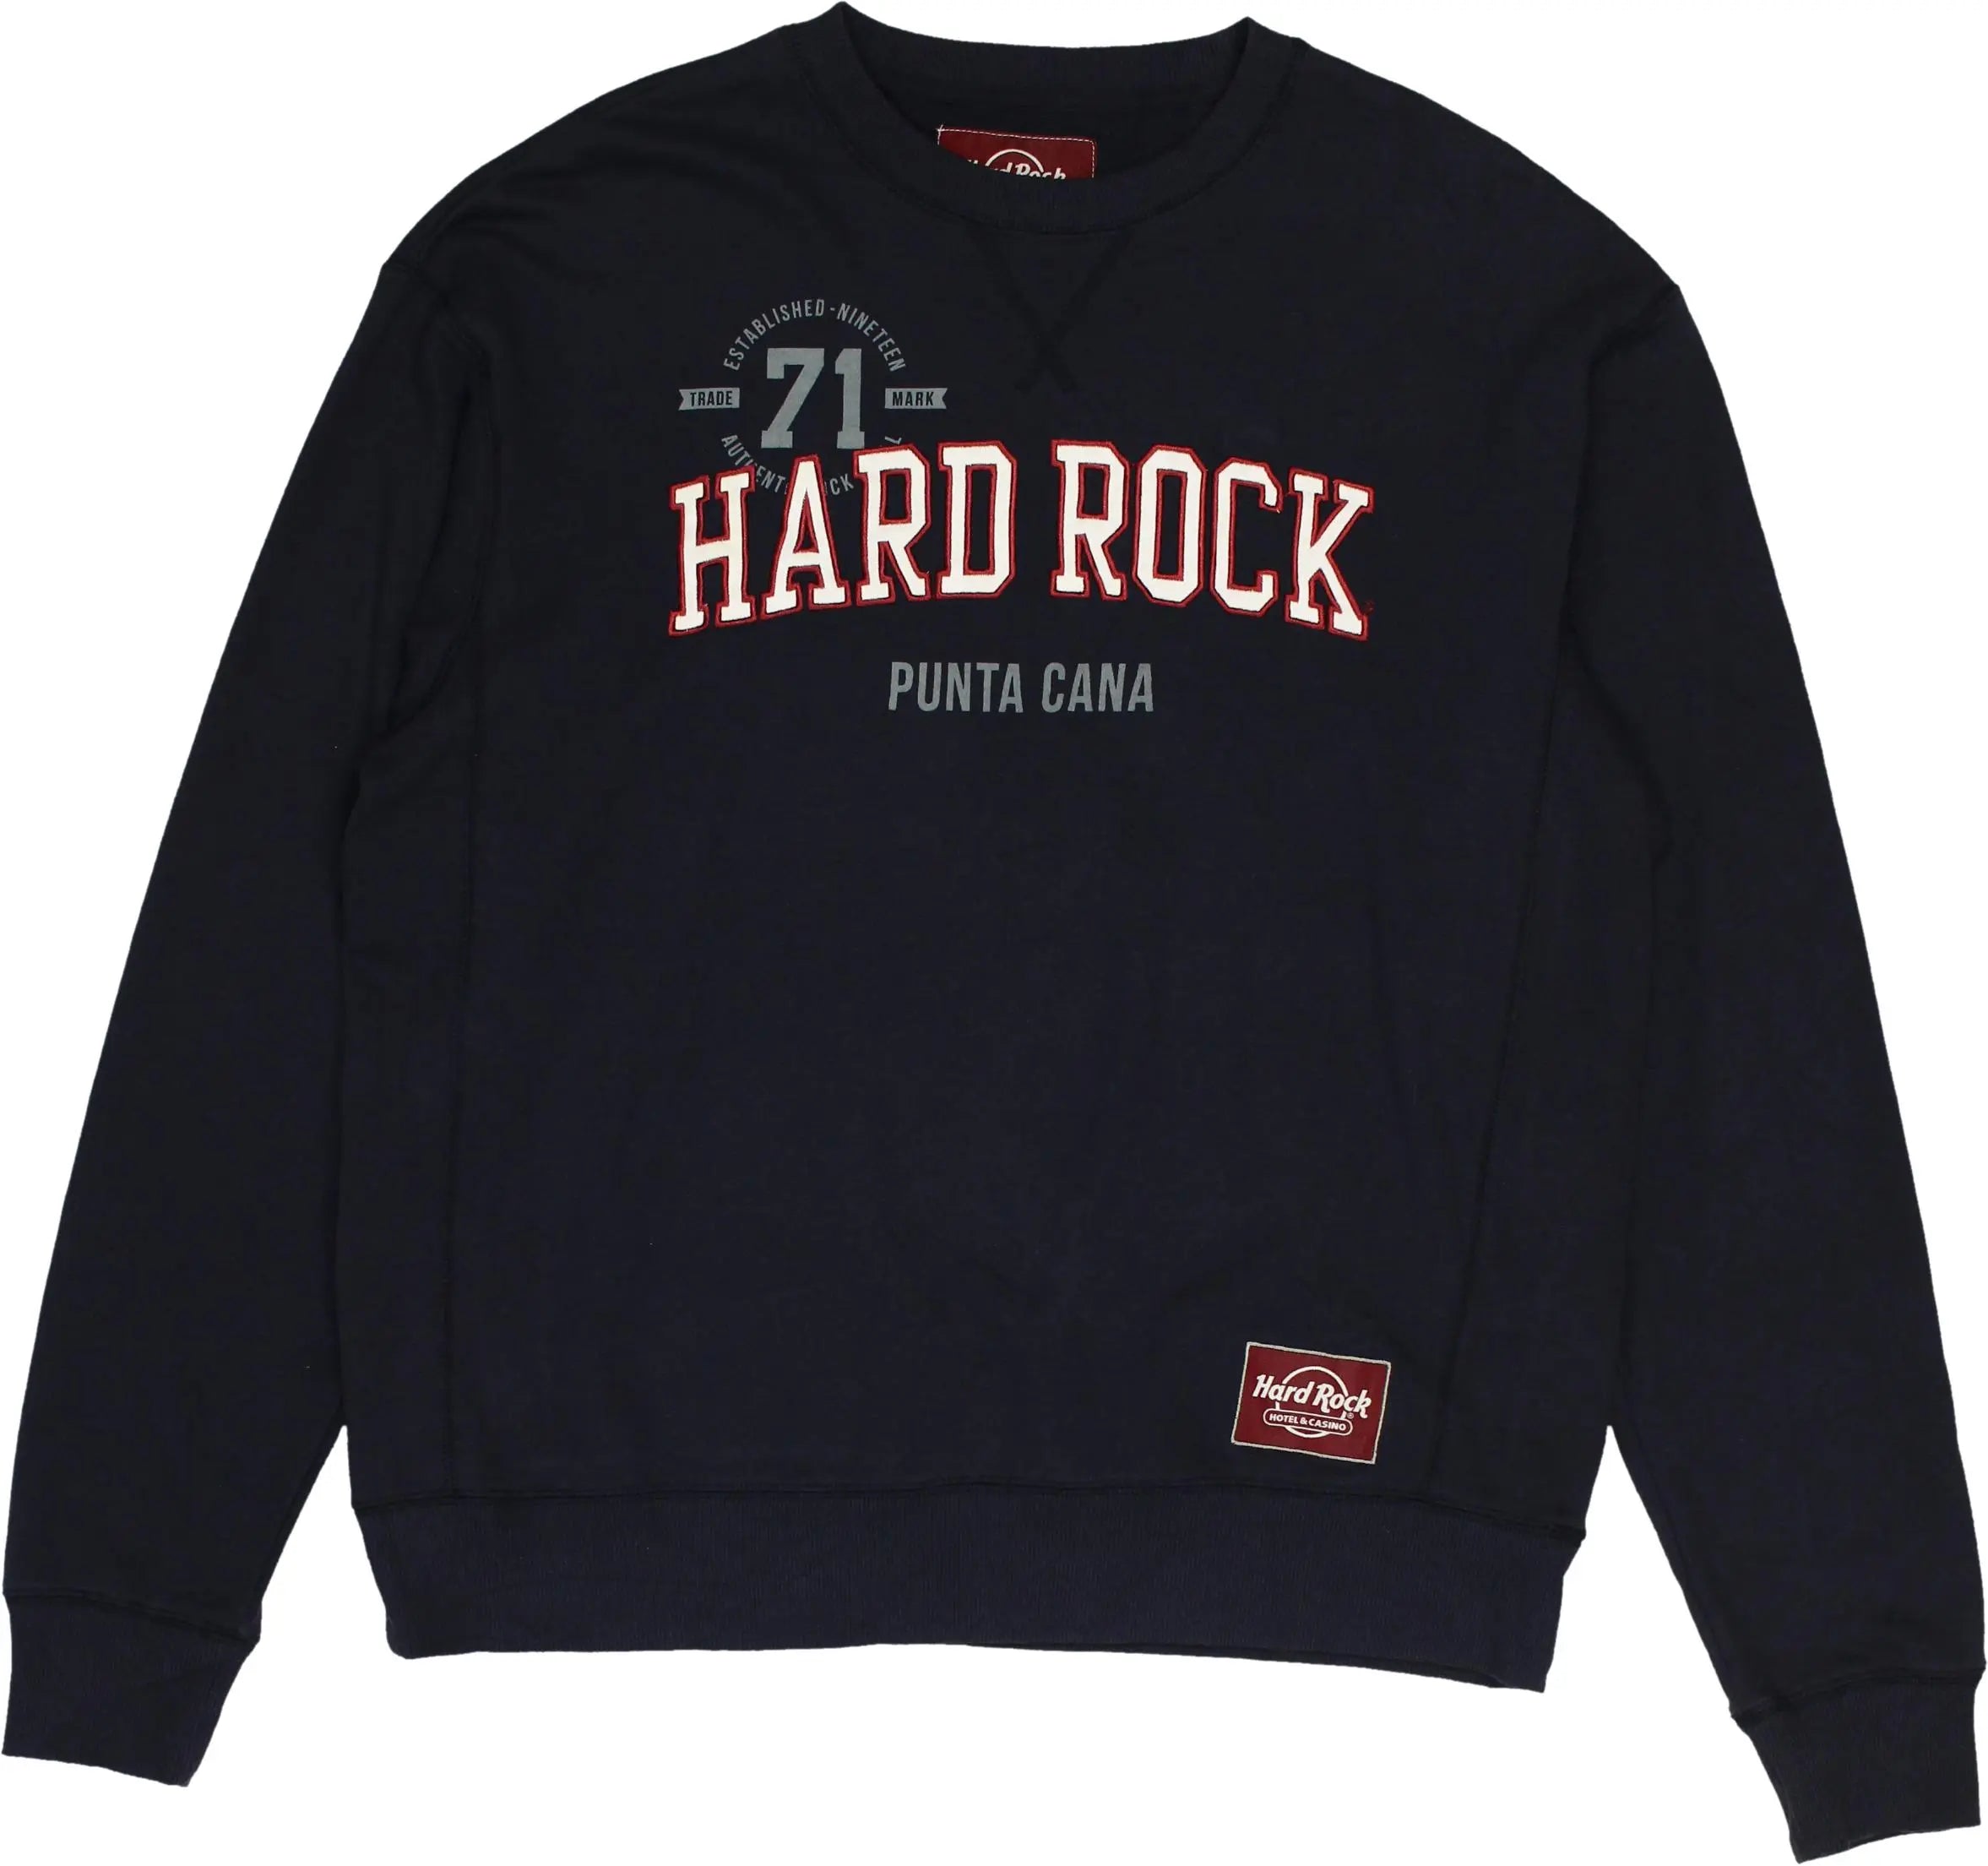 Hard Rock Cafe - Hard Rock Cafe Sweater- ThriftTale.com - Vintage and second handclothing